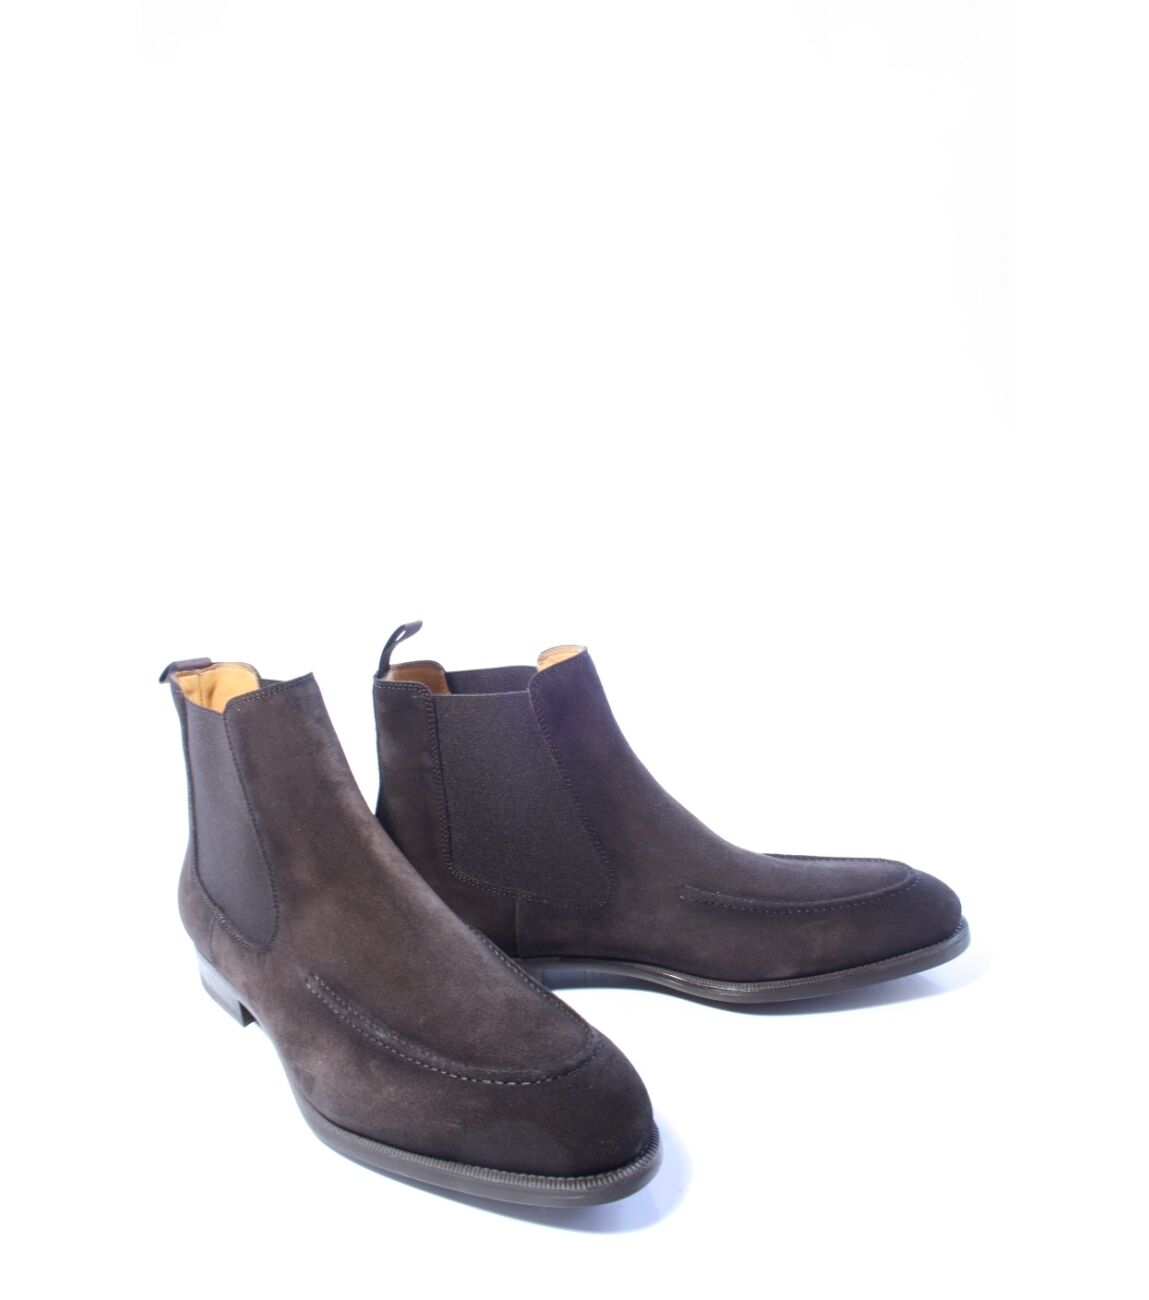 Magnanni Heren boots gekleed bruin 44